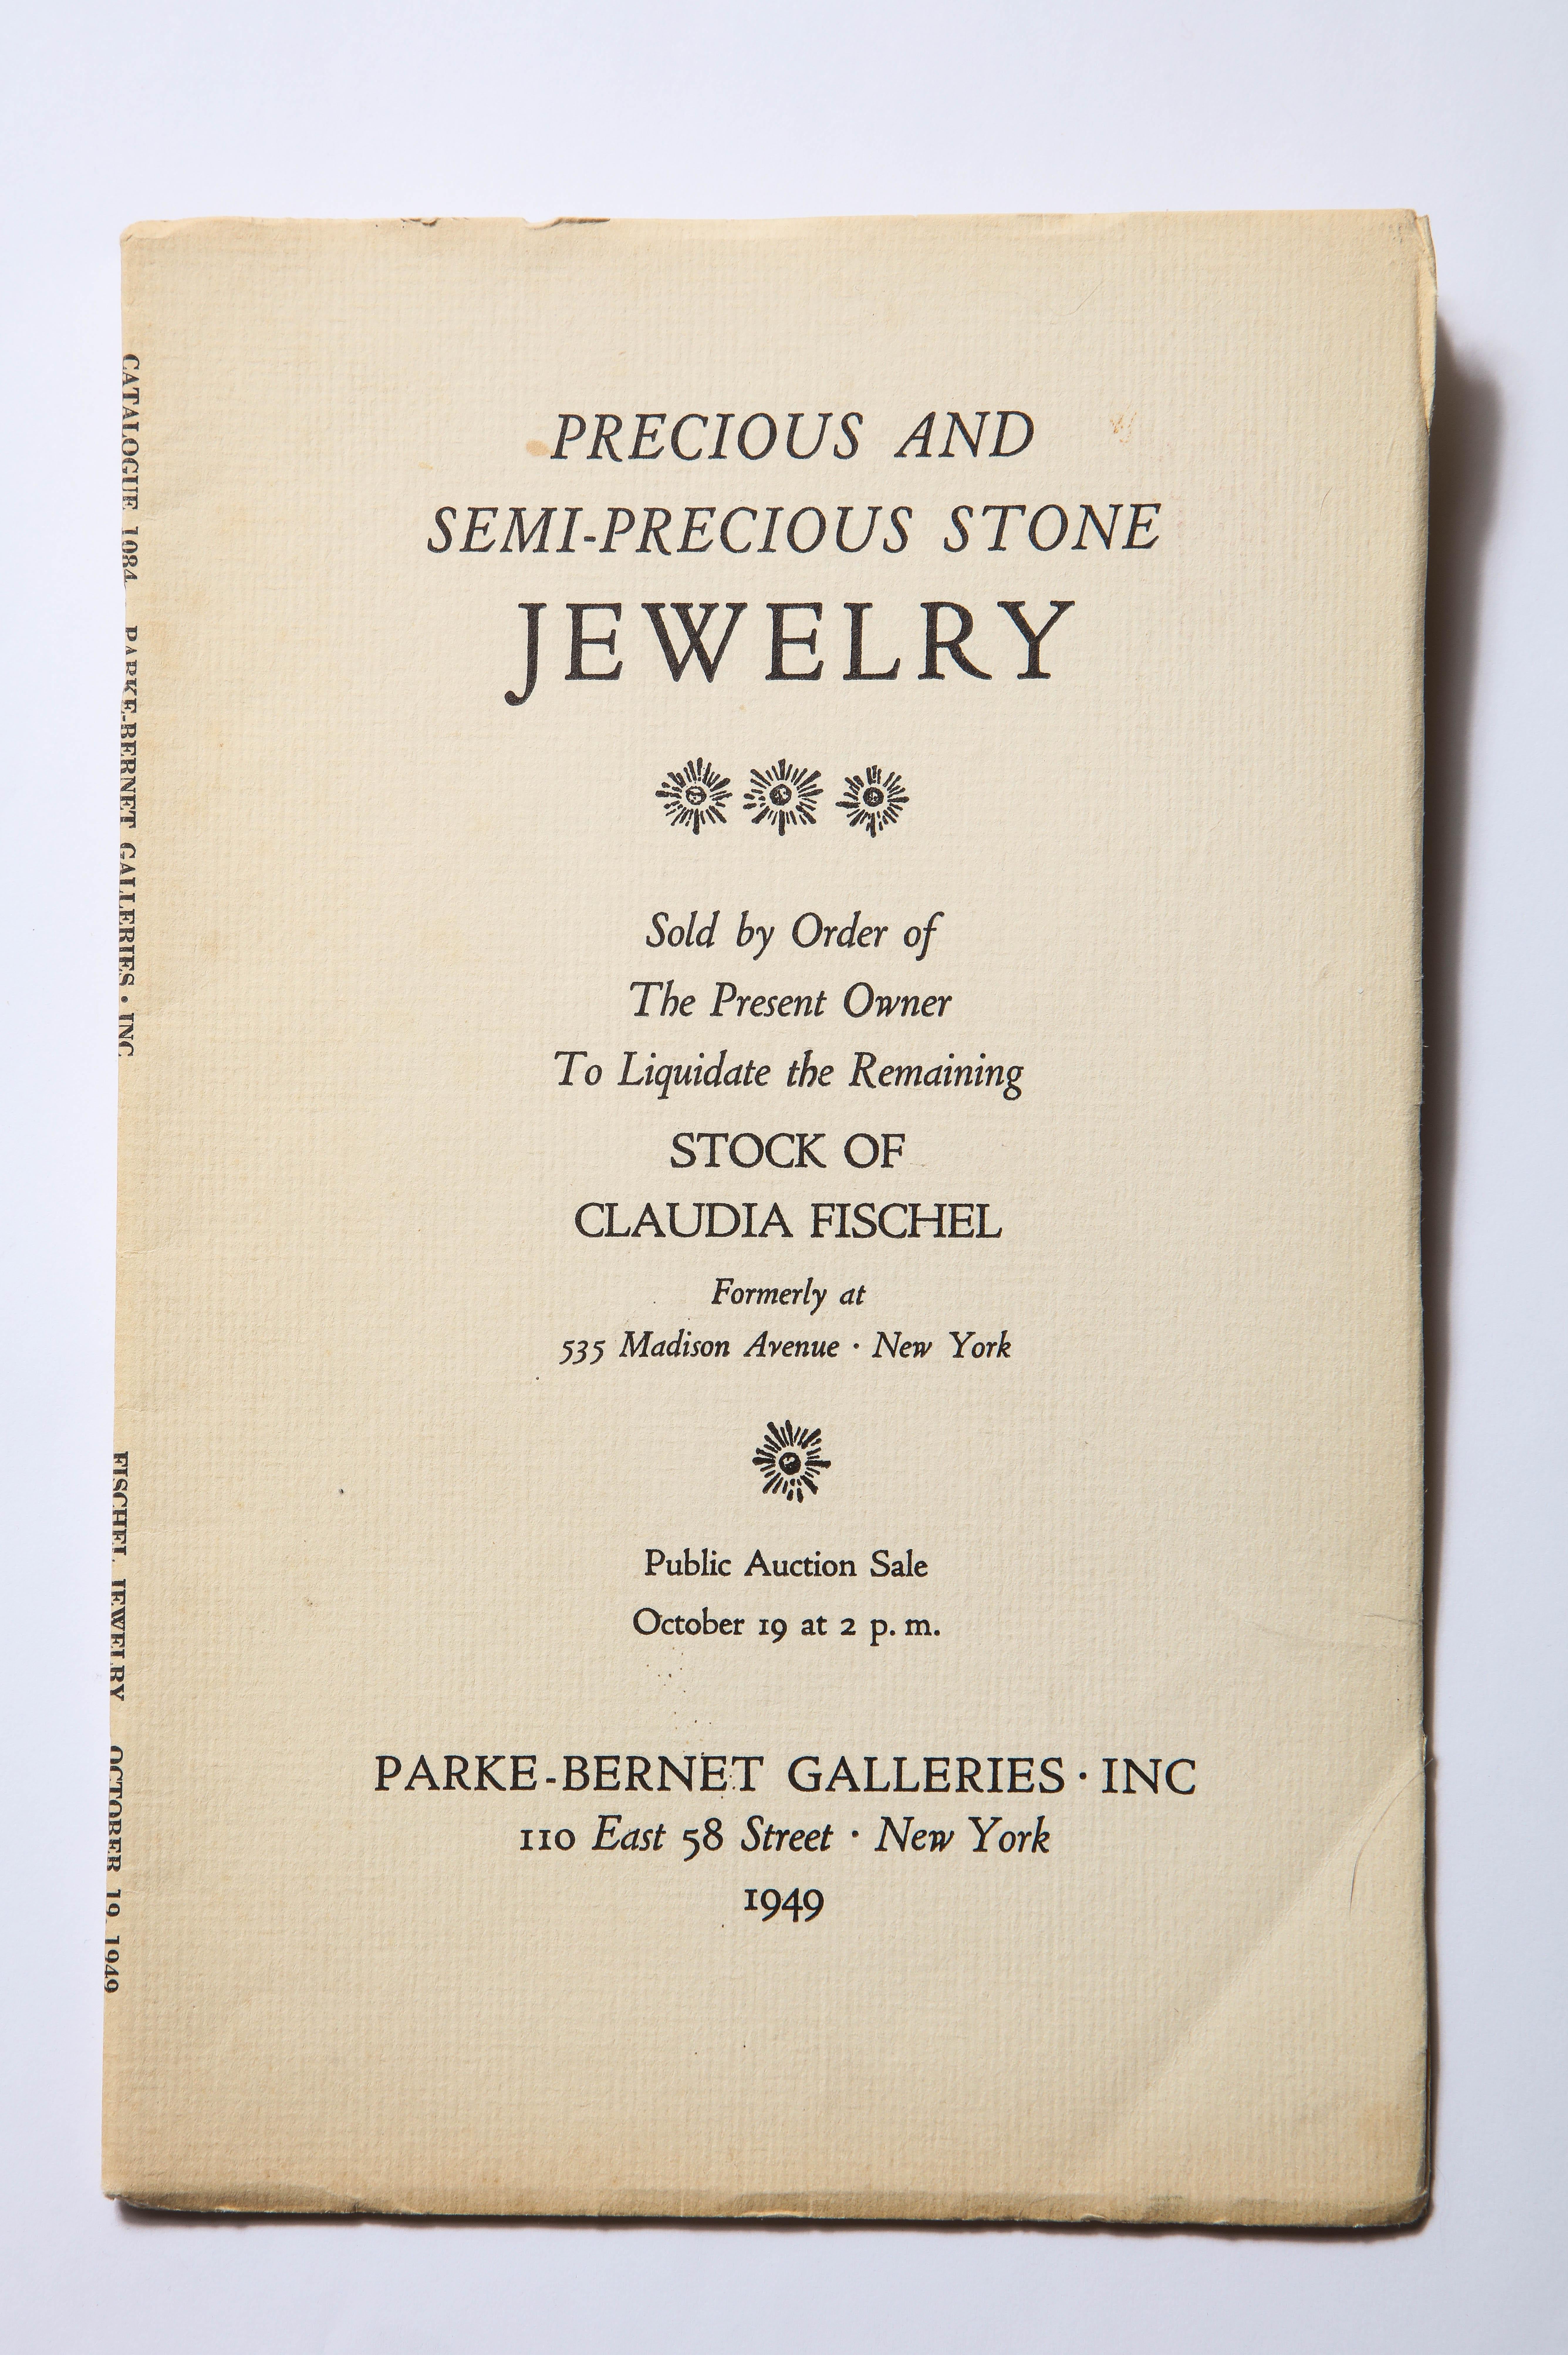 Sammler Vintage Sotheby Important Jewelry Auktionskataloge Cartier Art Deco im Angebot 5